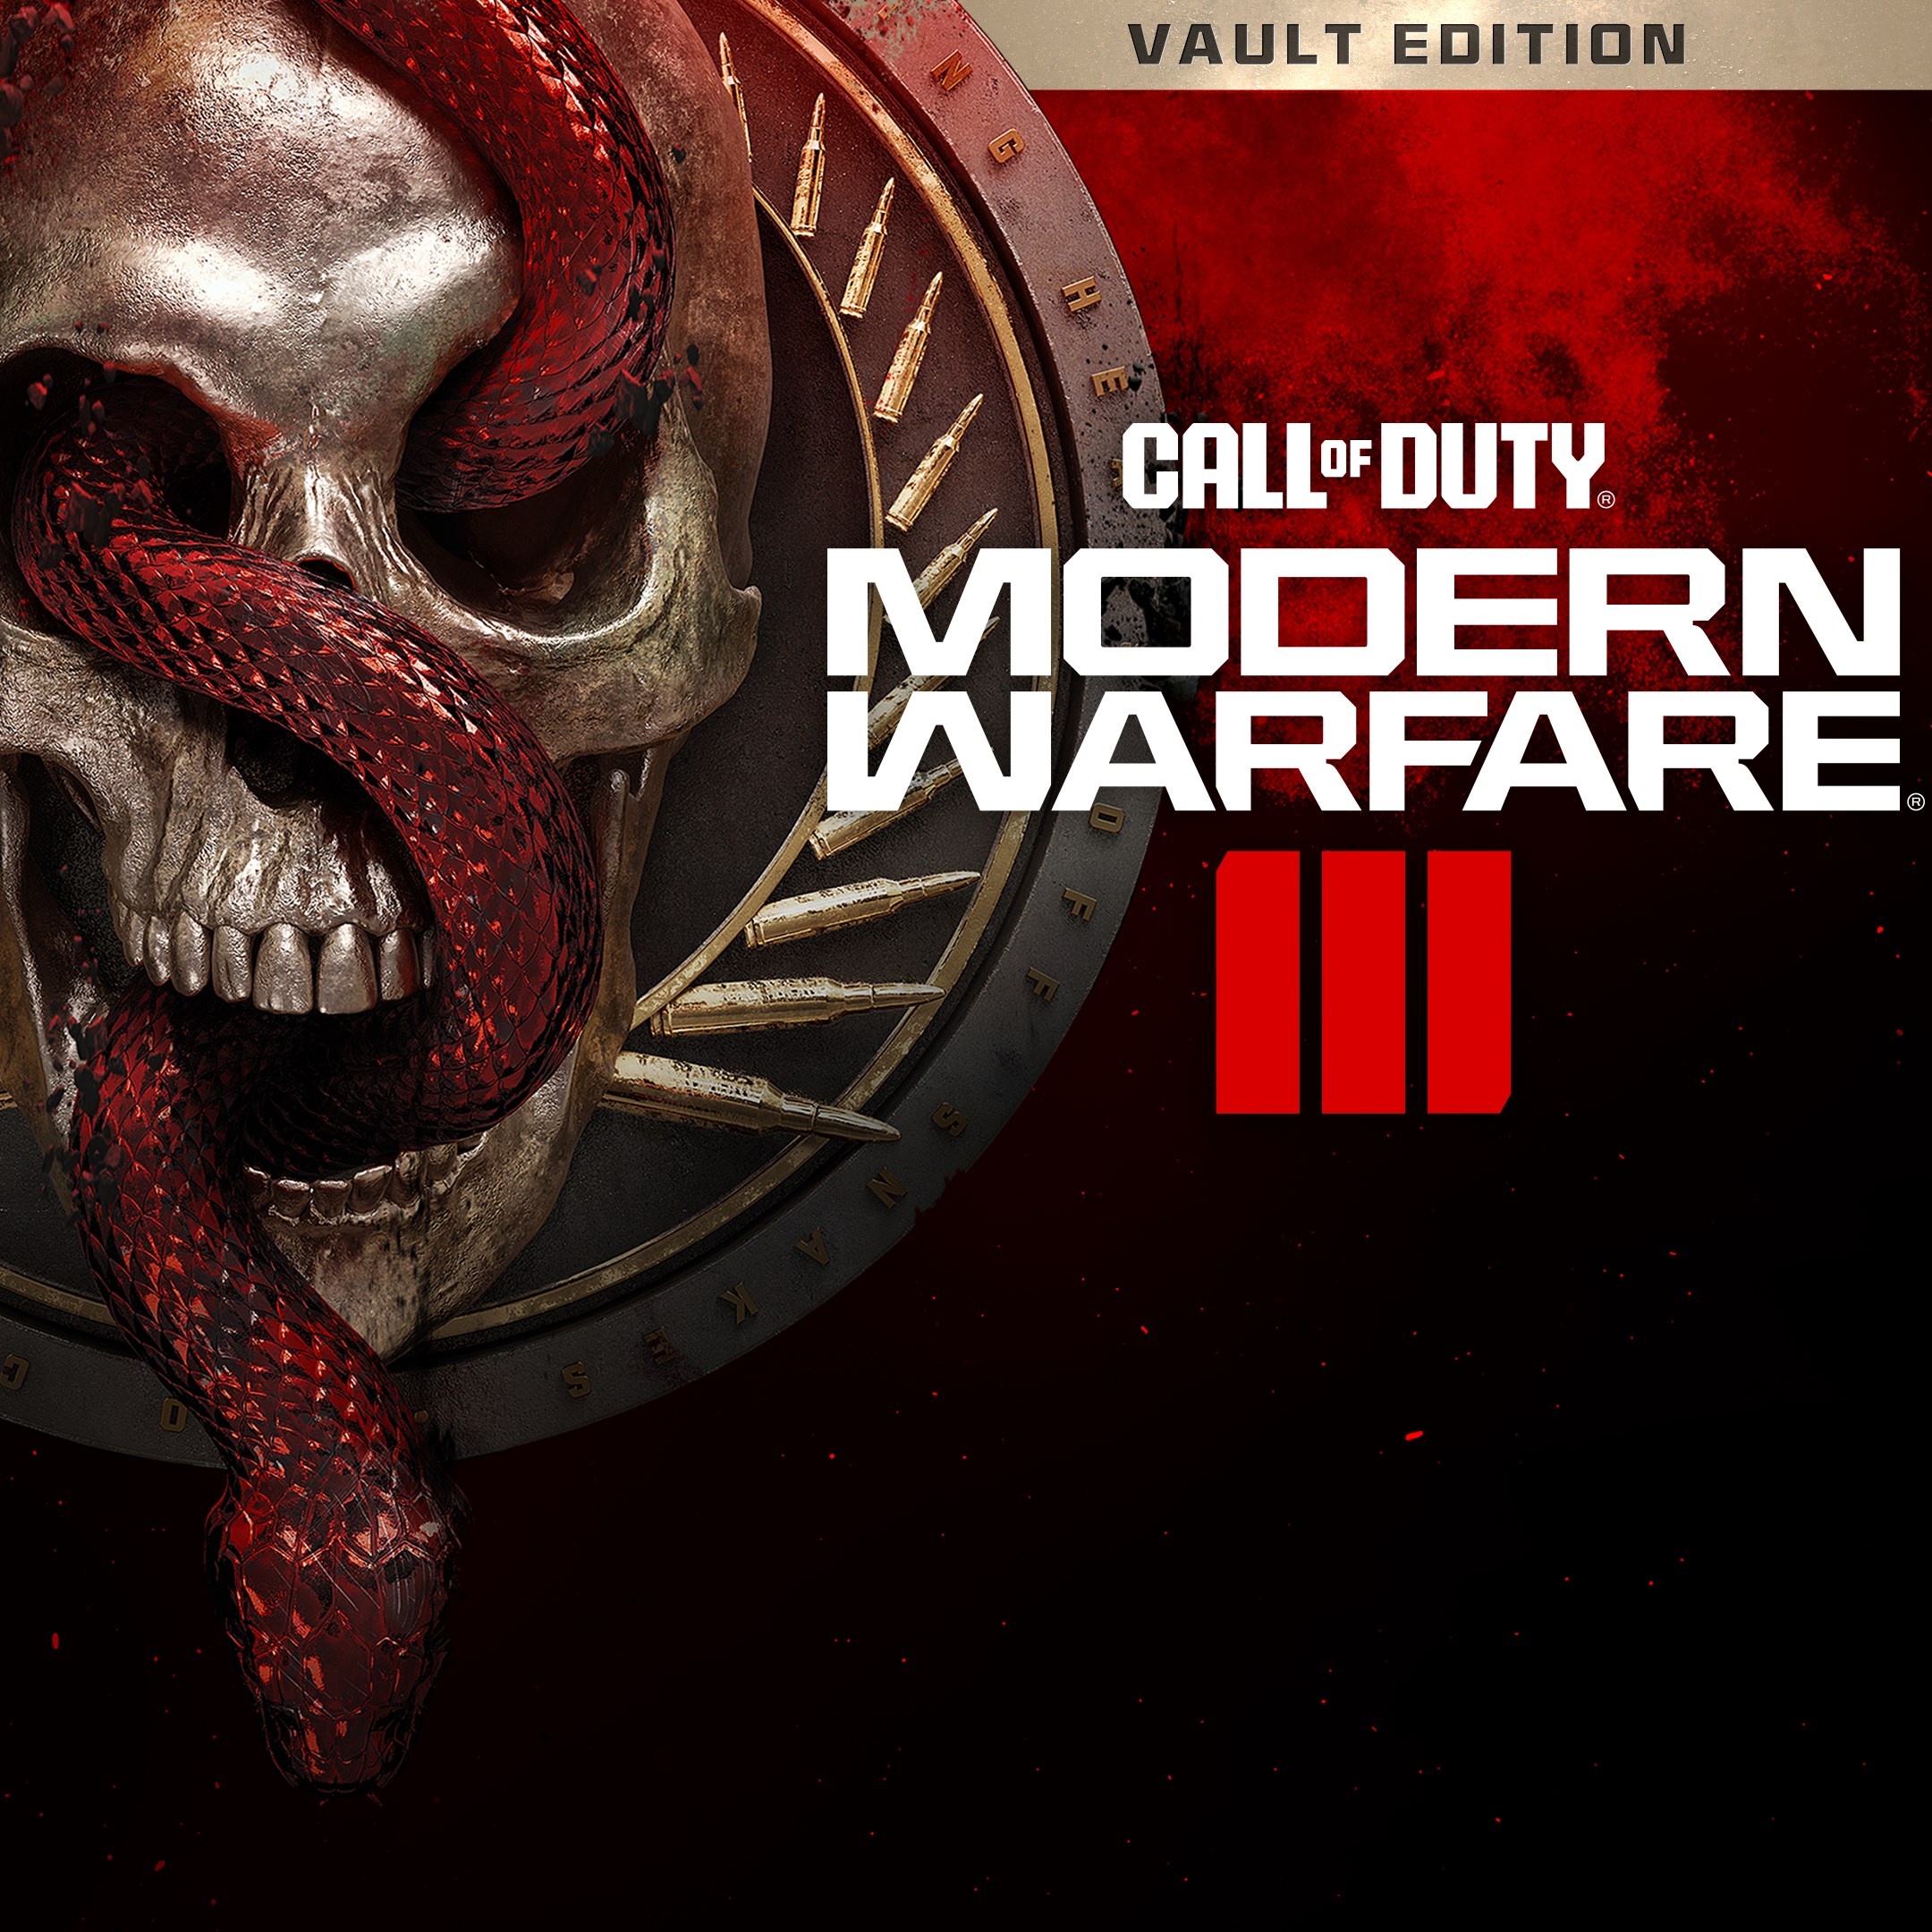 Call of Duty: Modern Warfare II - Vault Edition Breakdown